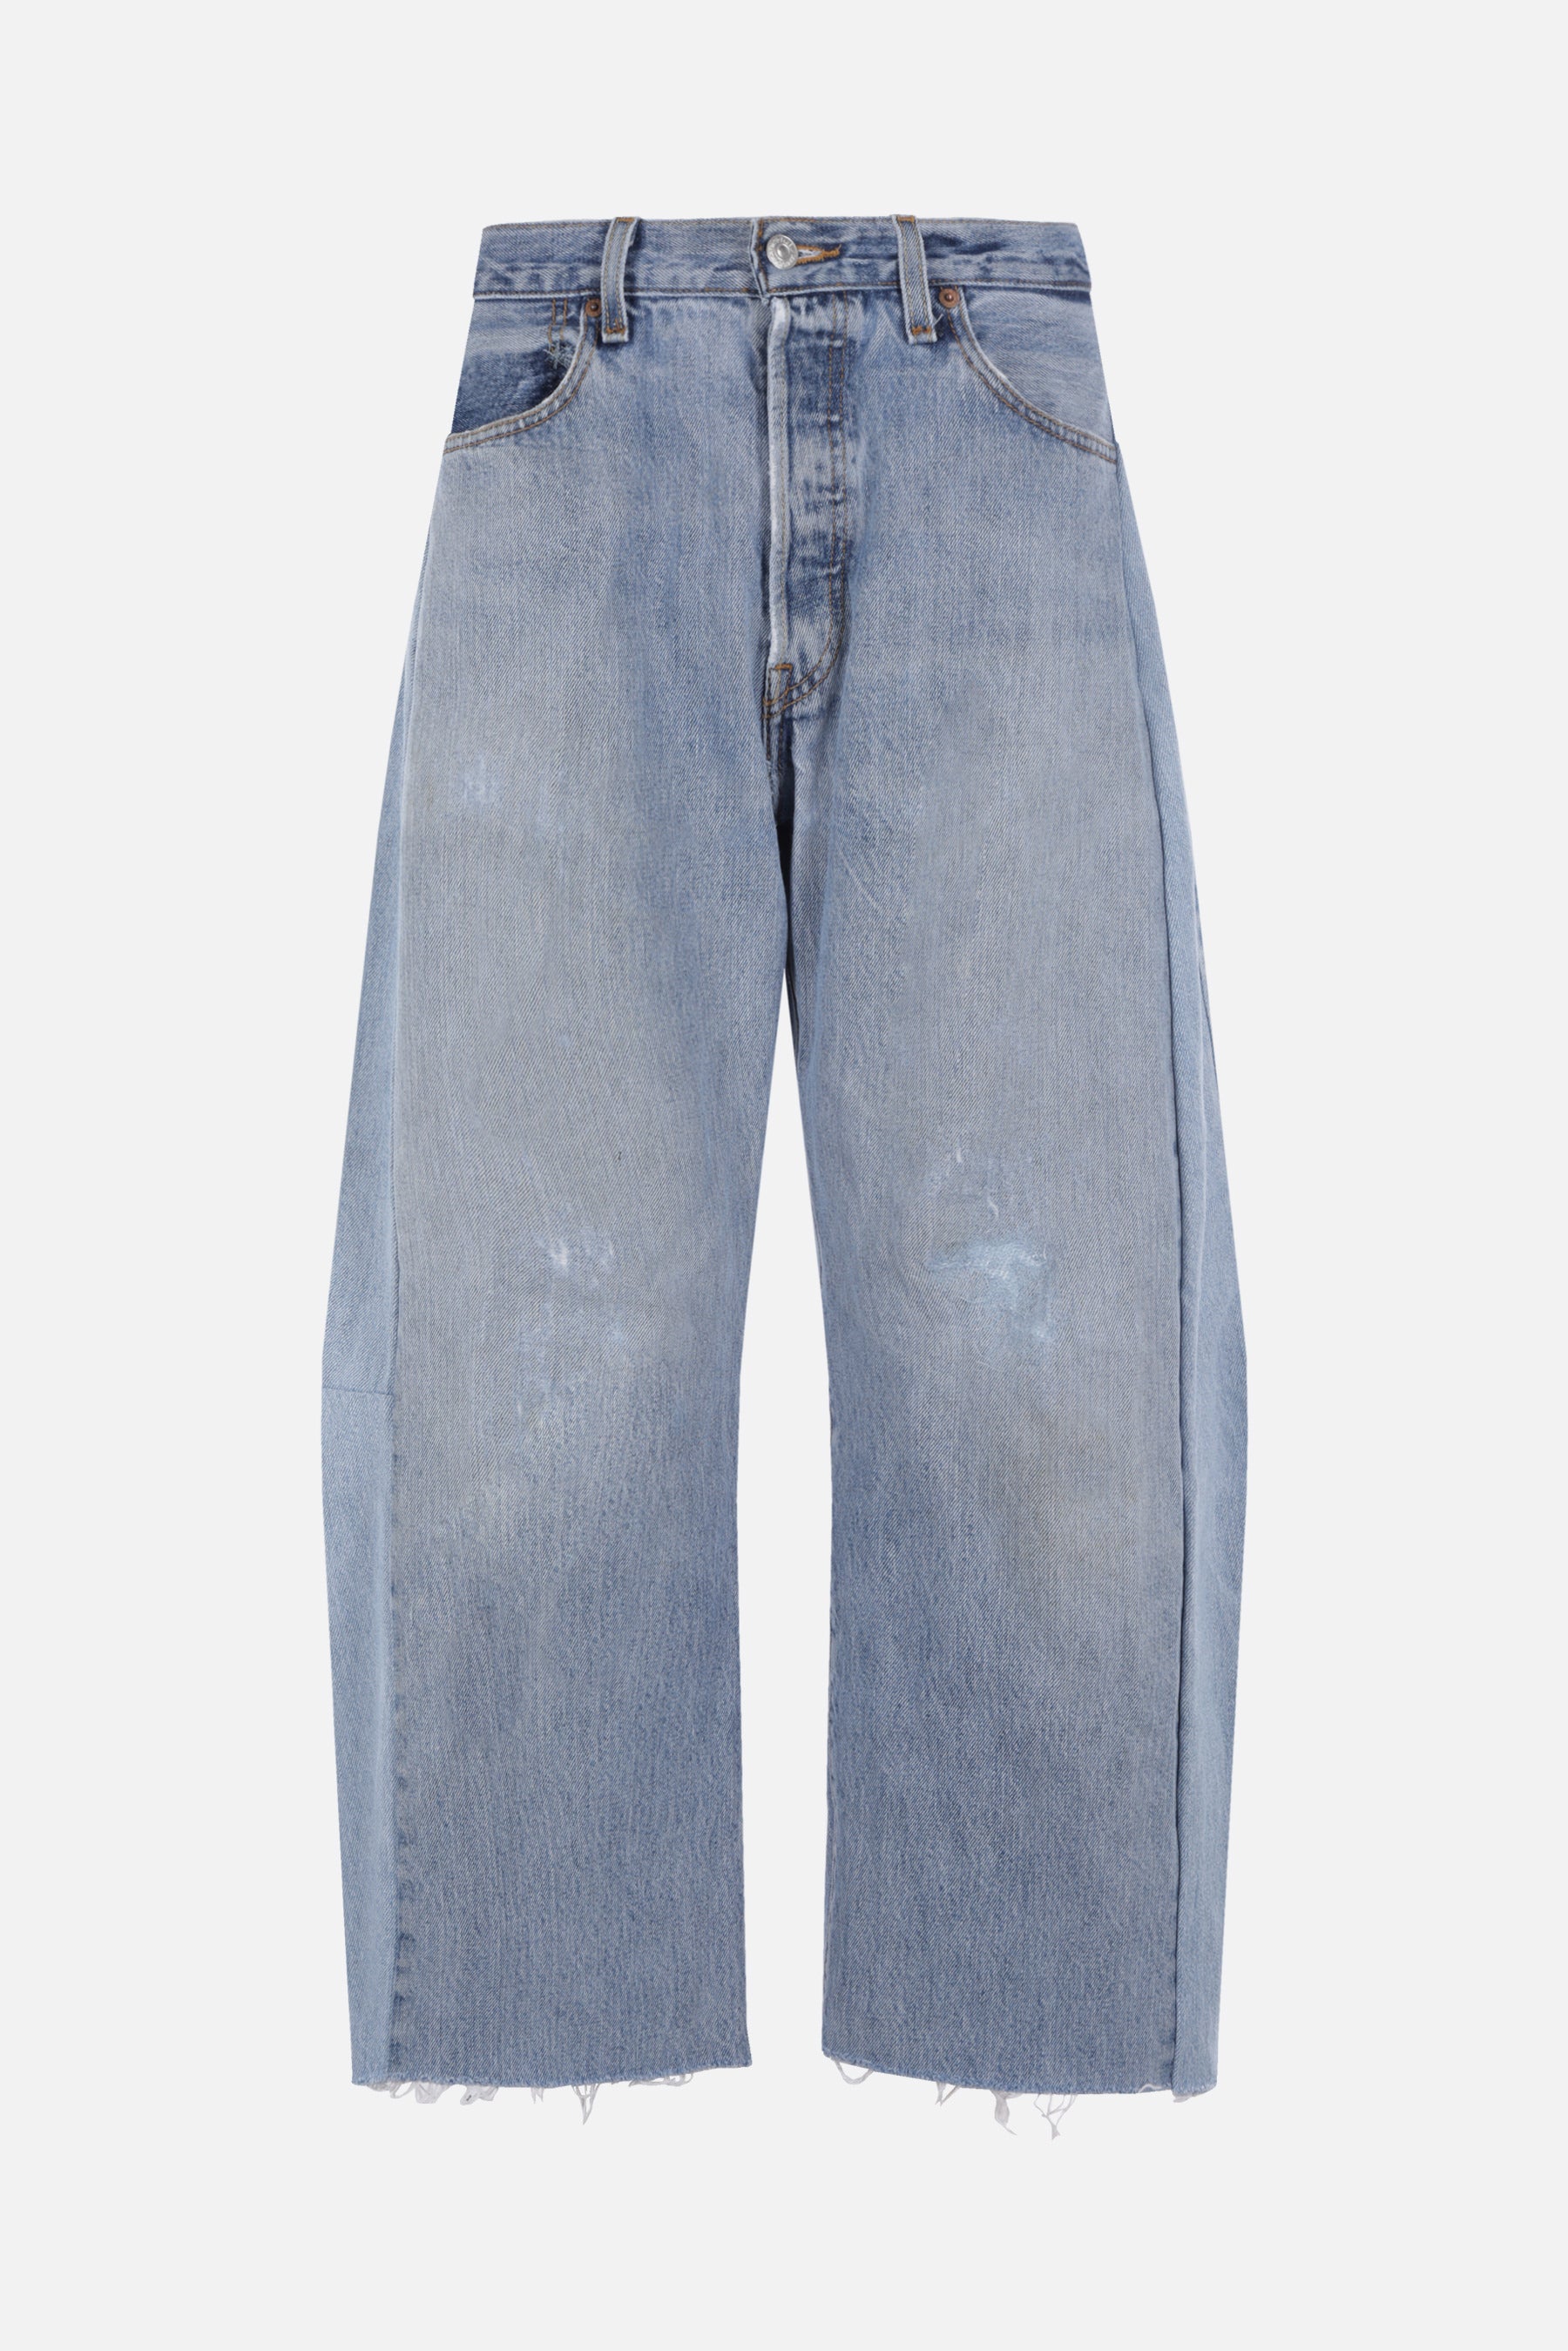 Lasso upcycled vintage denim jeans